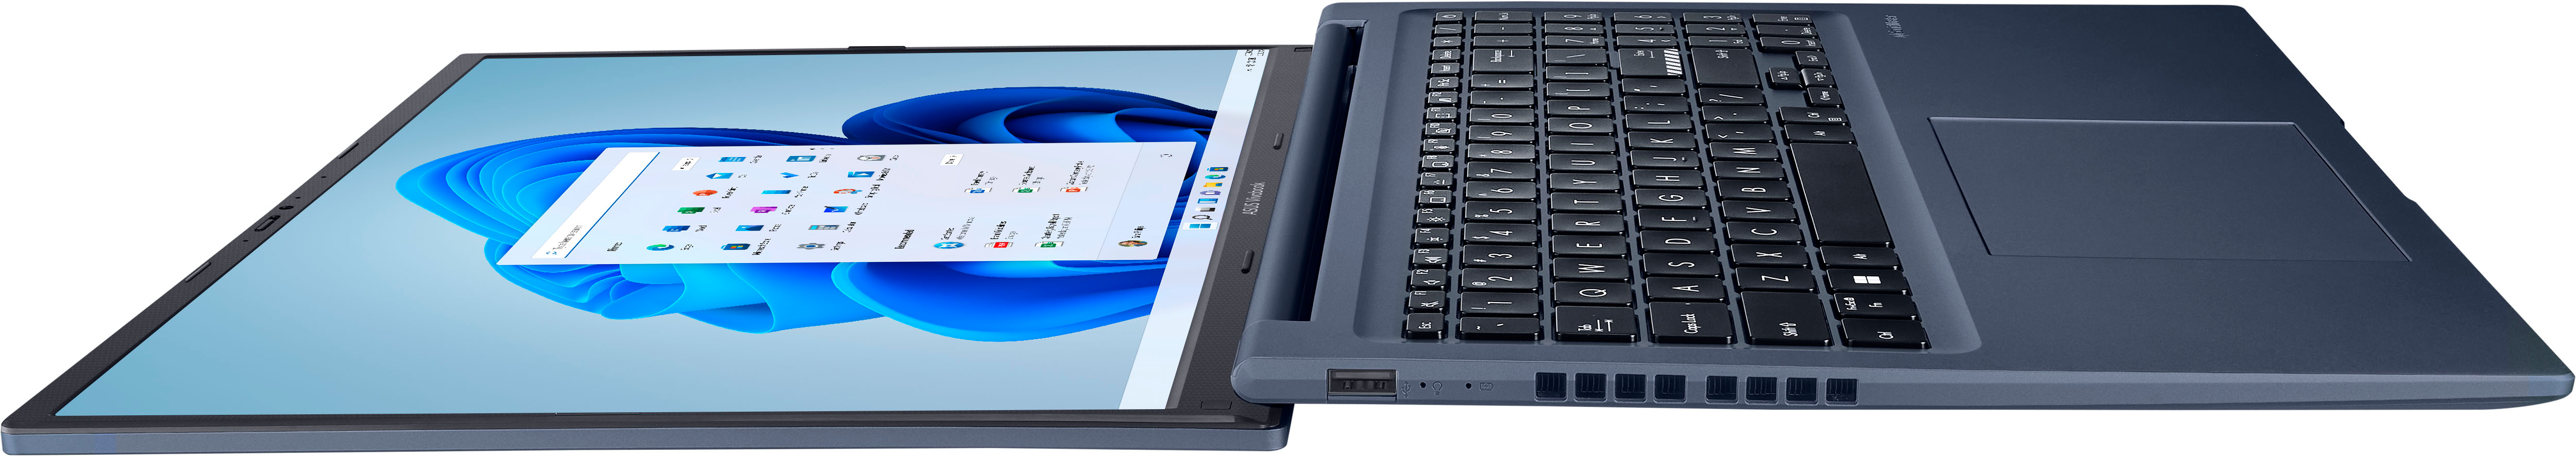 ASUS - Vivobook 16 Laptop - AMD Ryzen 7 5800H - 16GB Memory